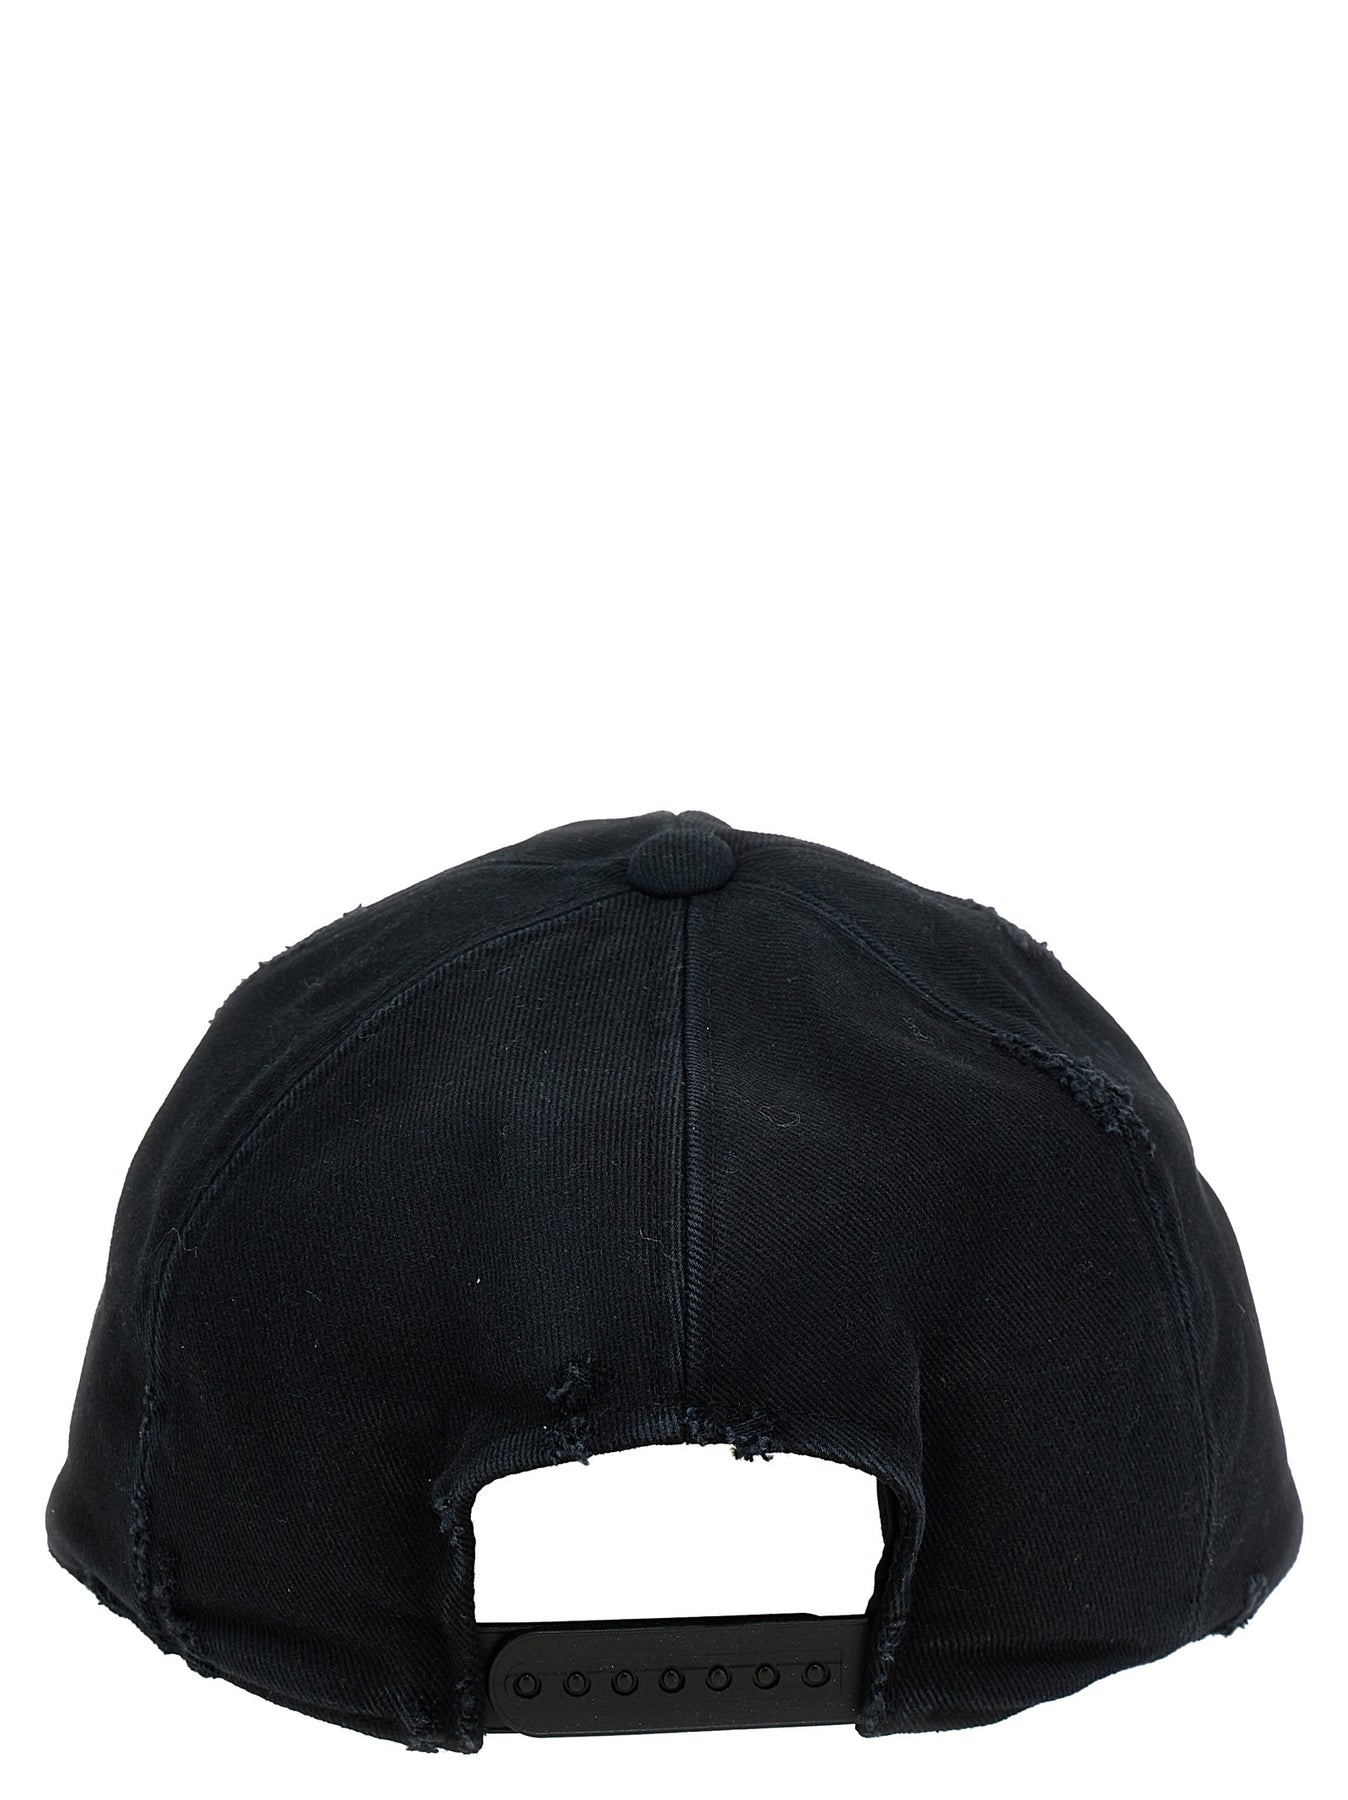 Used Effect Cap Hats Black - 3